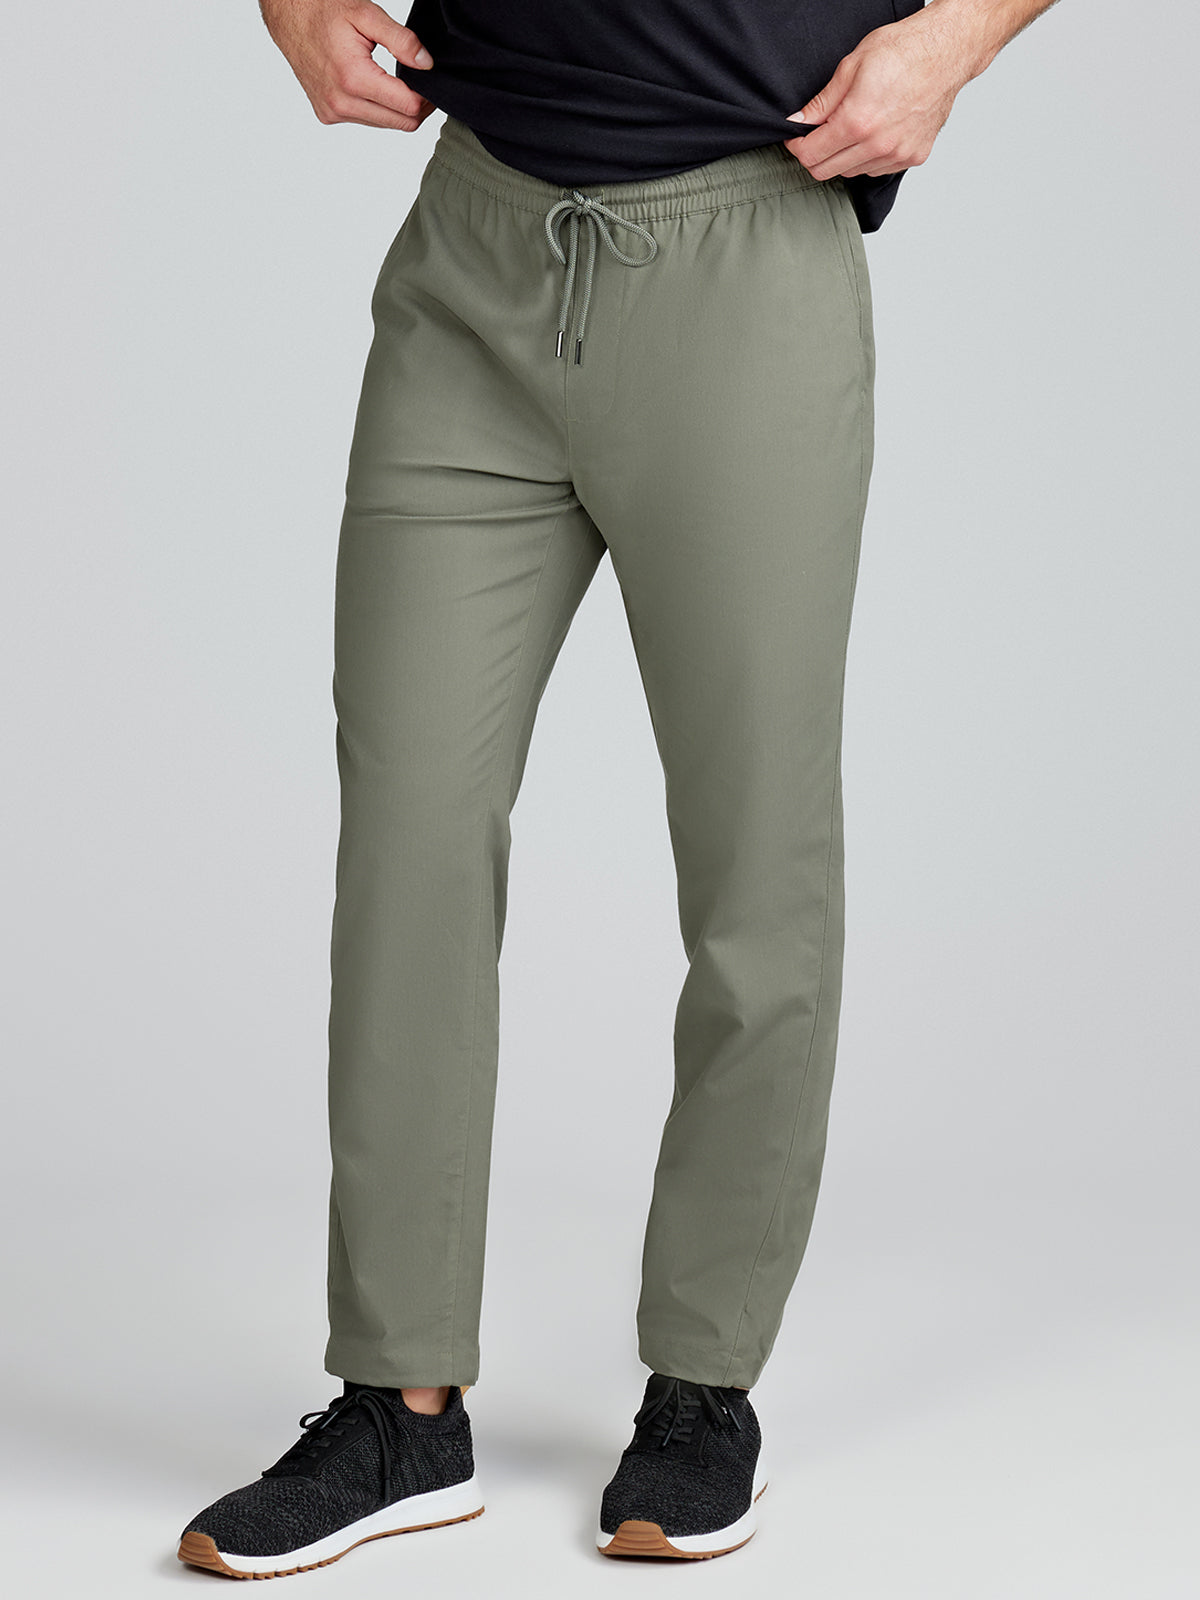 EveryDay Pant 2.0  Everyday pants, Golf pants, Polyester pants